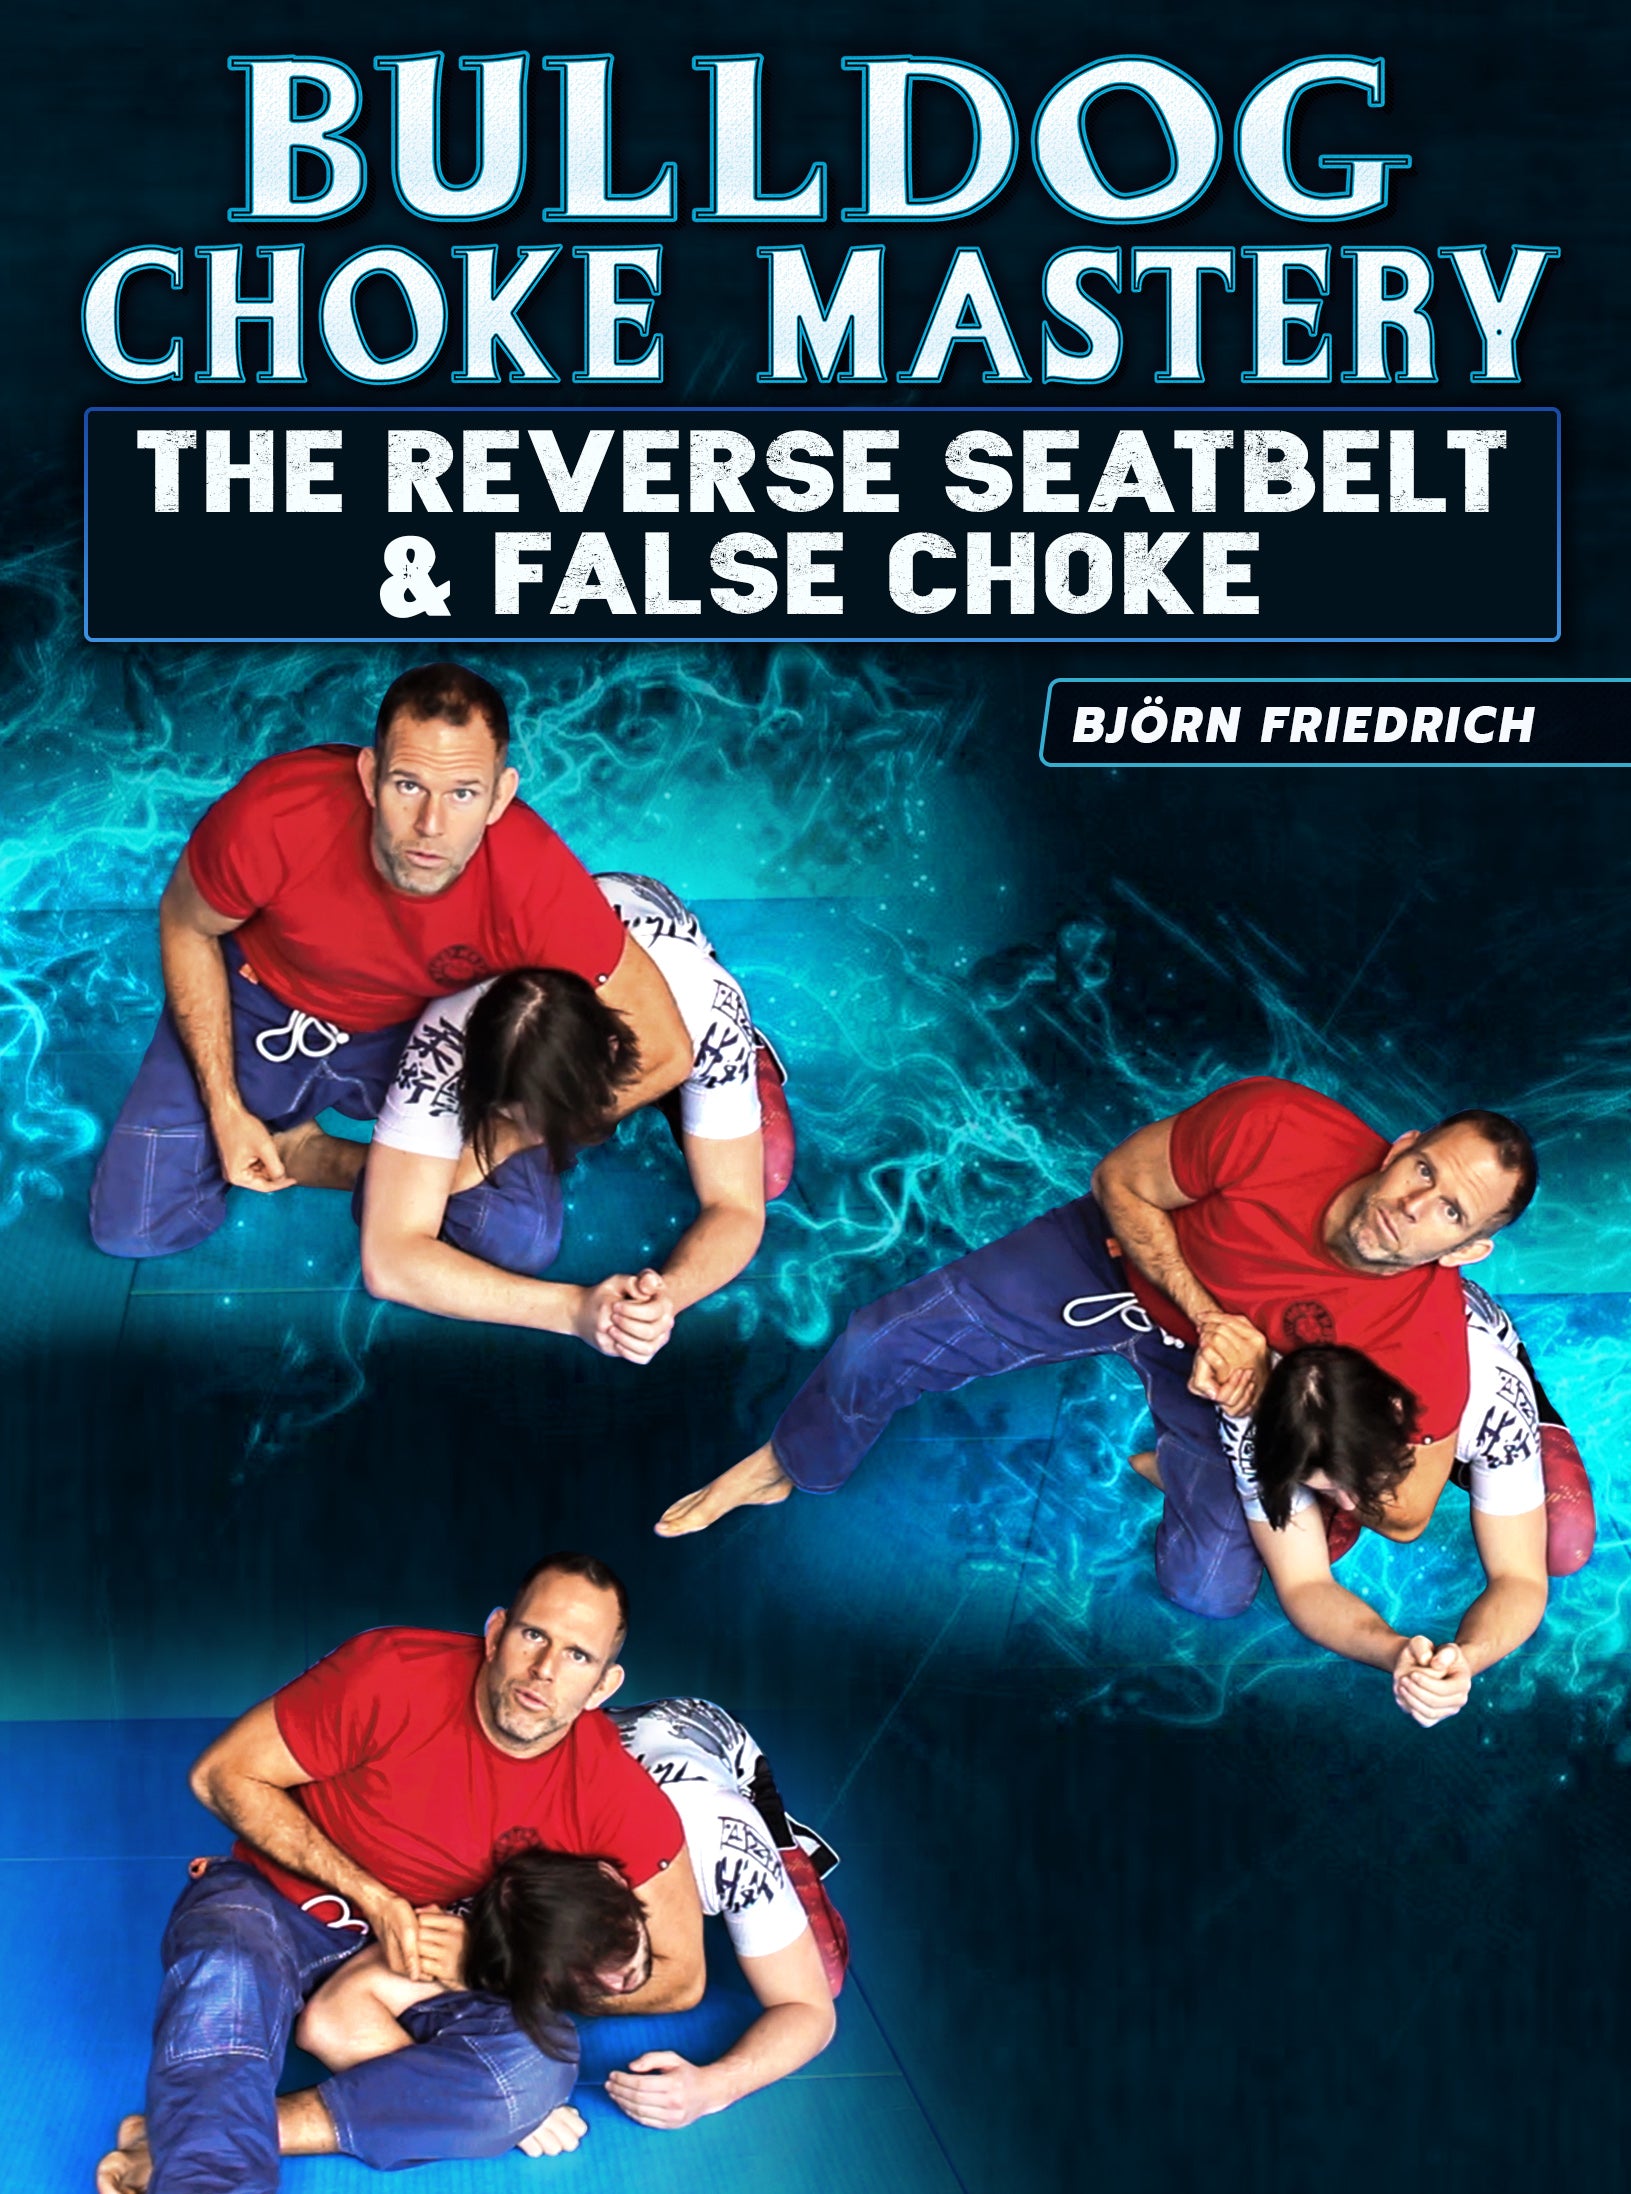 Bulldog Choke Mastery by Bjorn Friedrich BJJ Fanatics